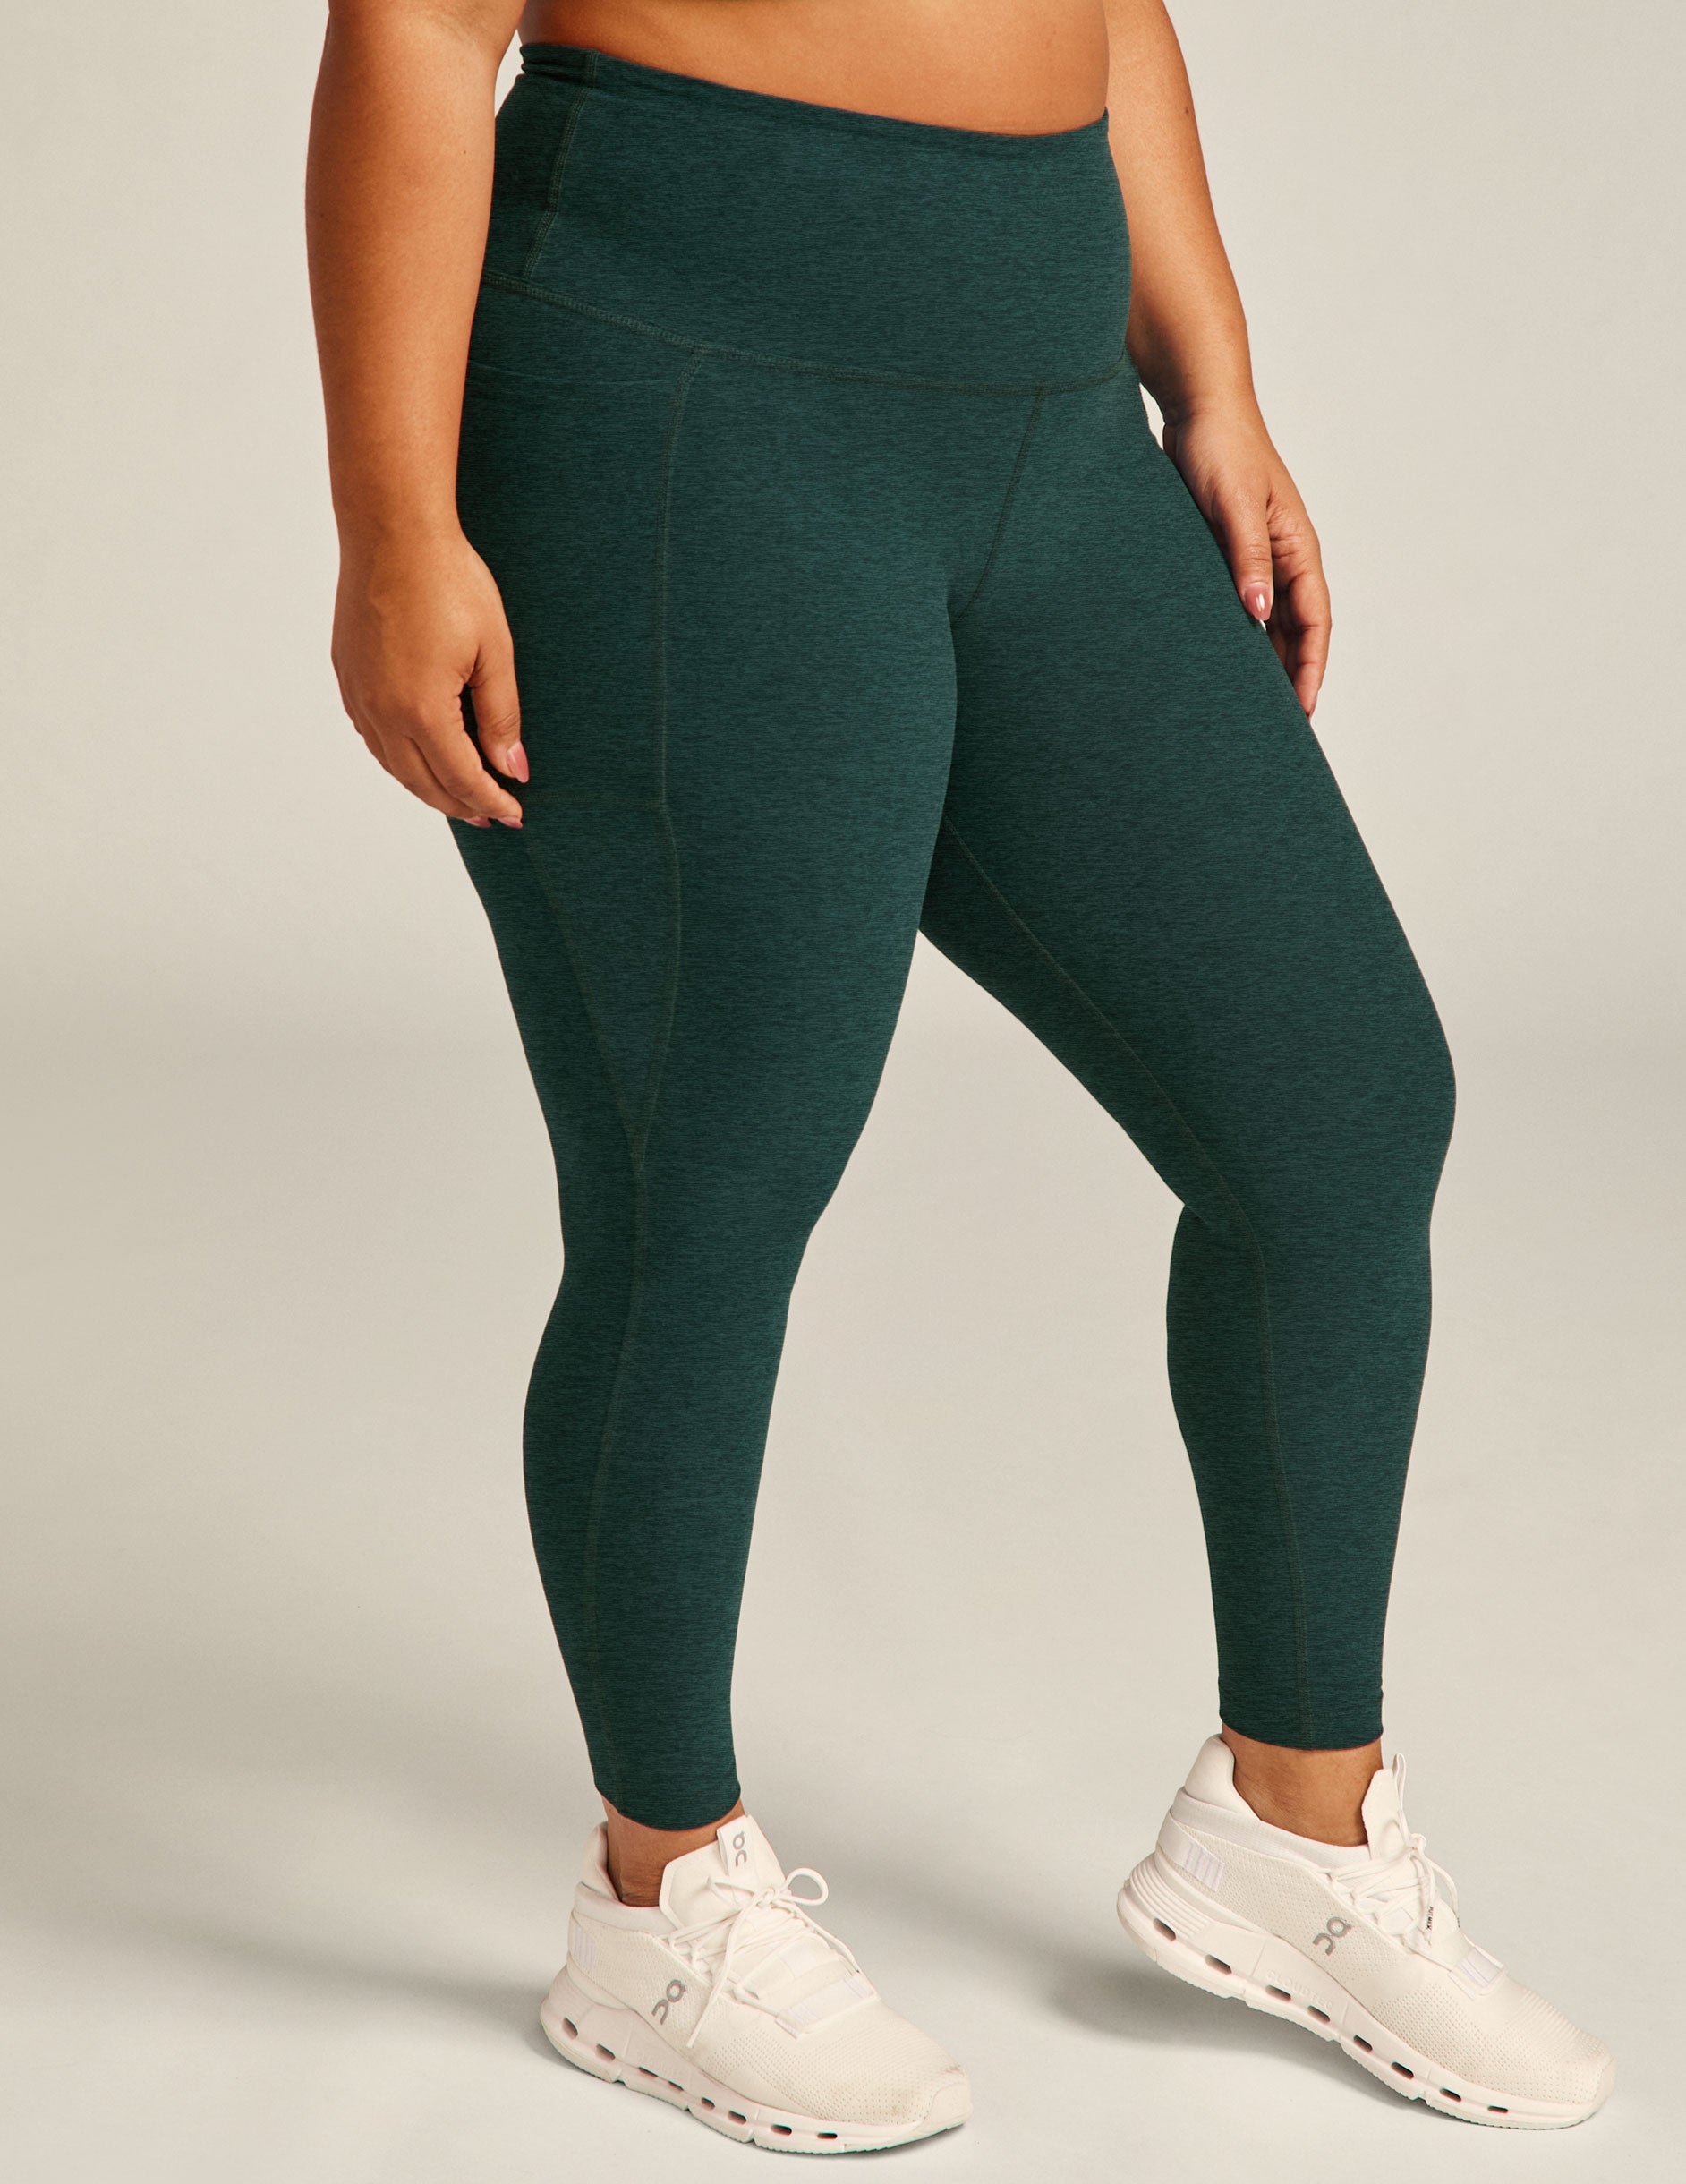 Ivy Park Adidas X Plus leggings in Green | Lyst